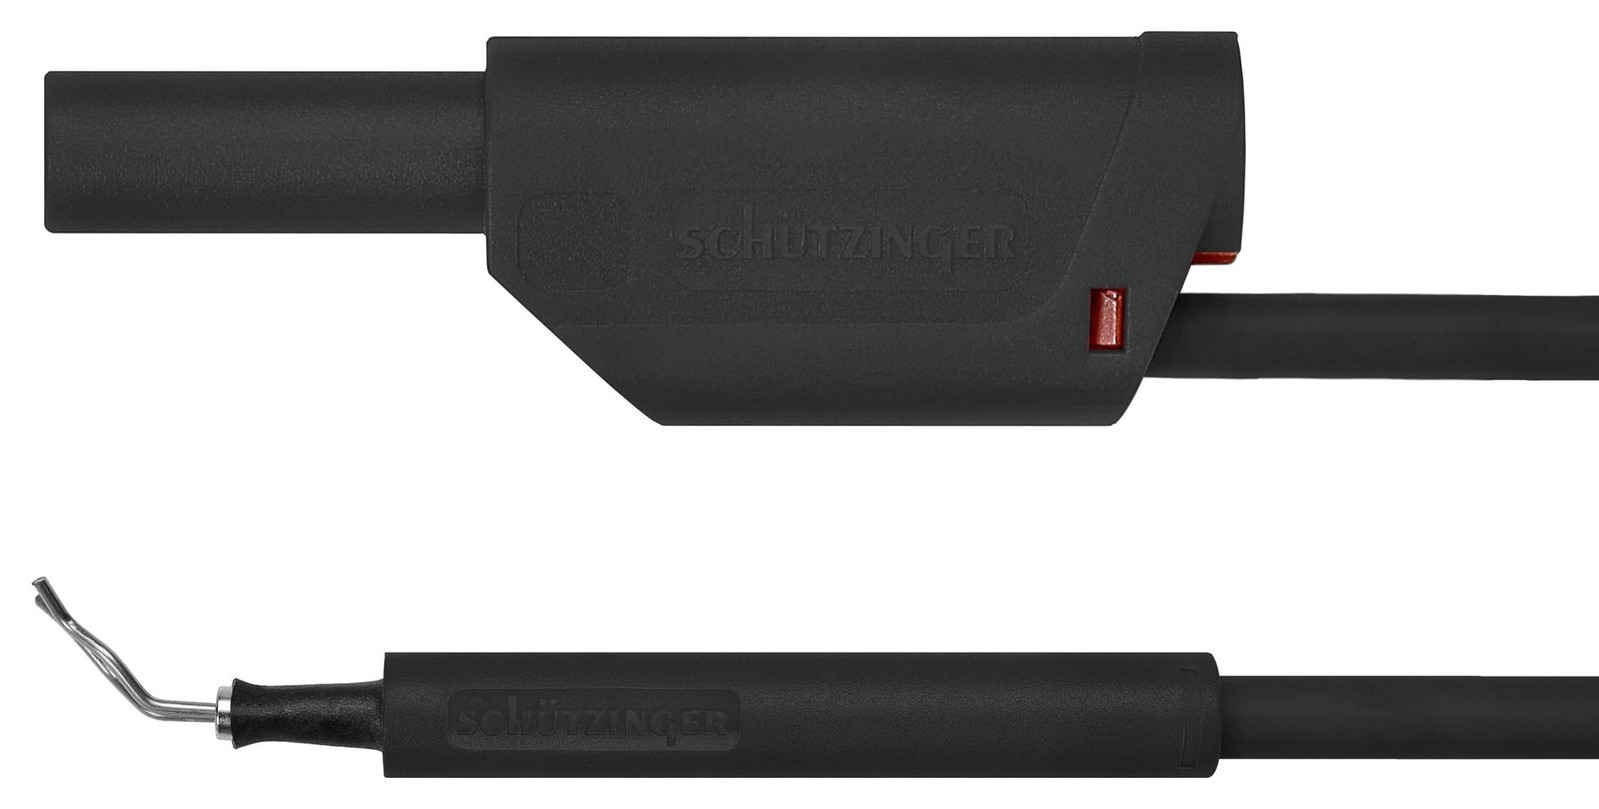 Schutzinger Al 8321 / Zpk / 1 / 50 / Sw Test Lead, Banana Plug-Test Clip, 500mm